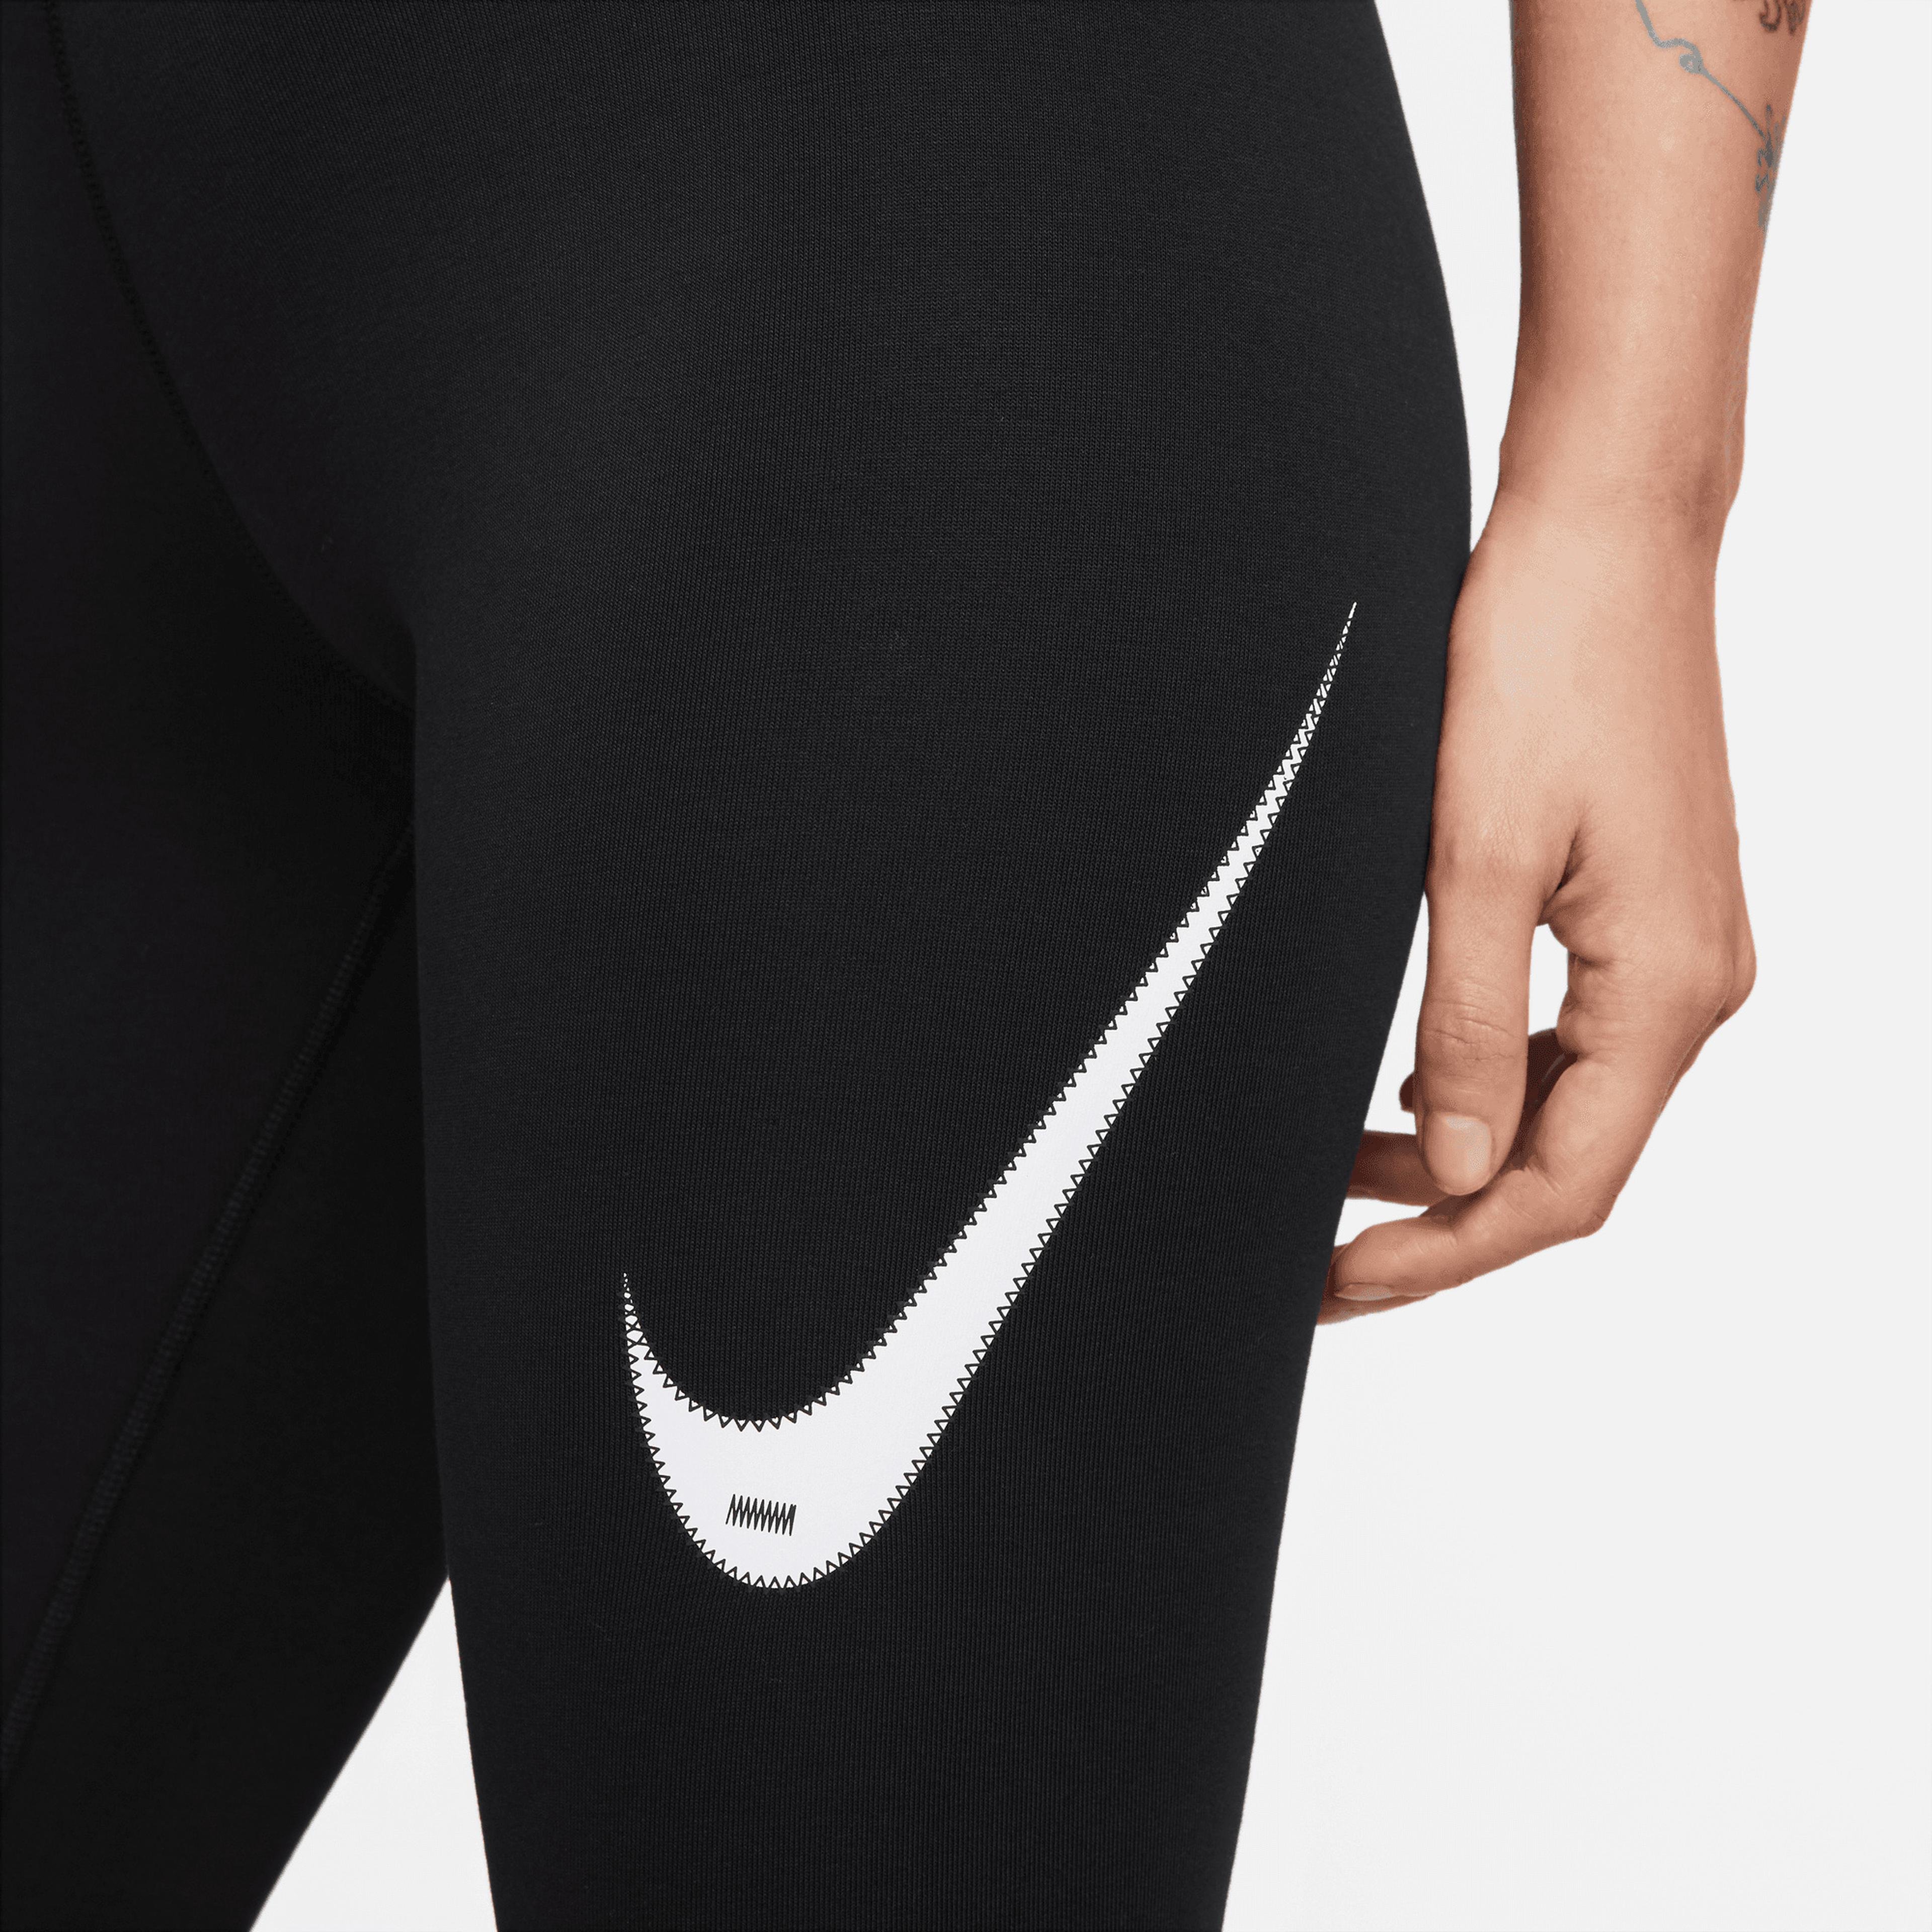 Nike Sportswear Swoosh Kadın Siyah Tayt